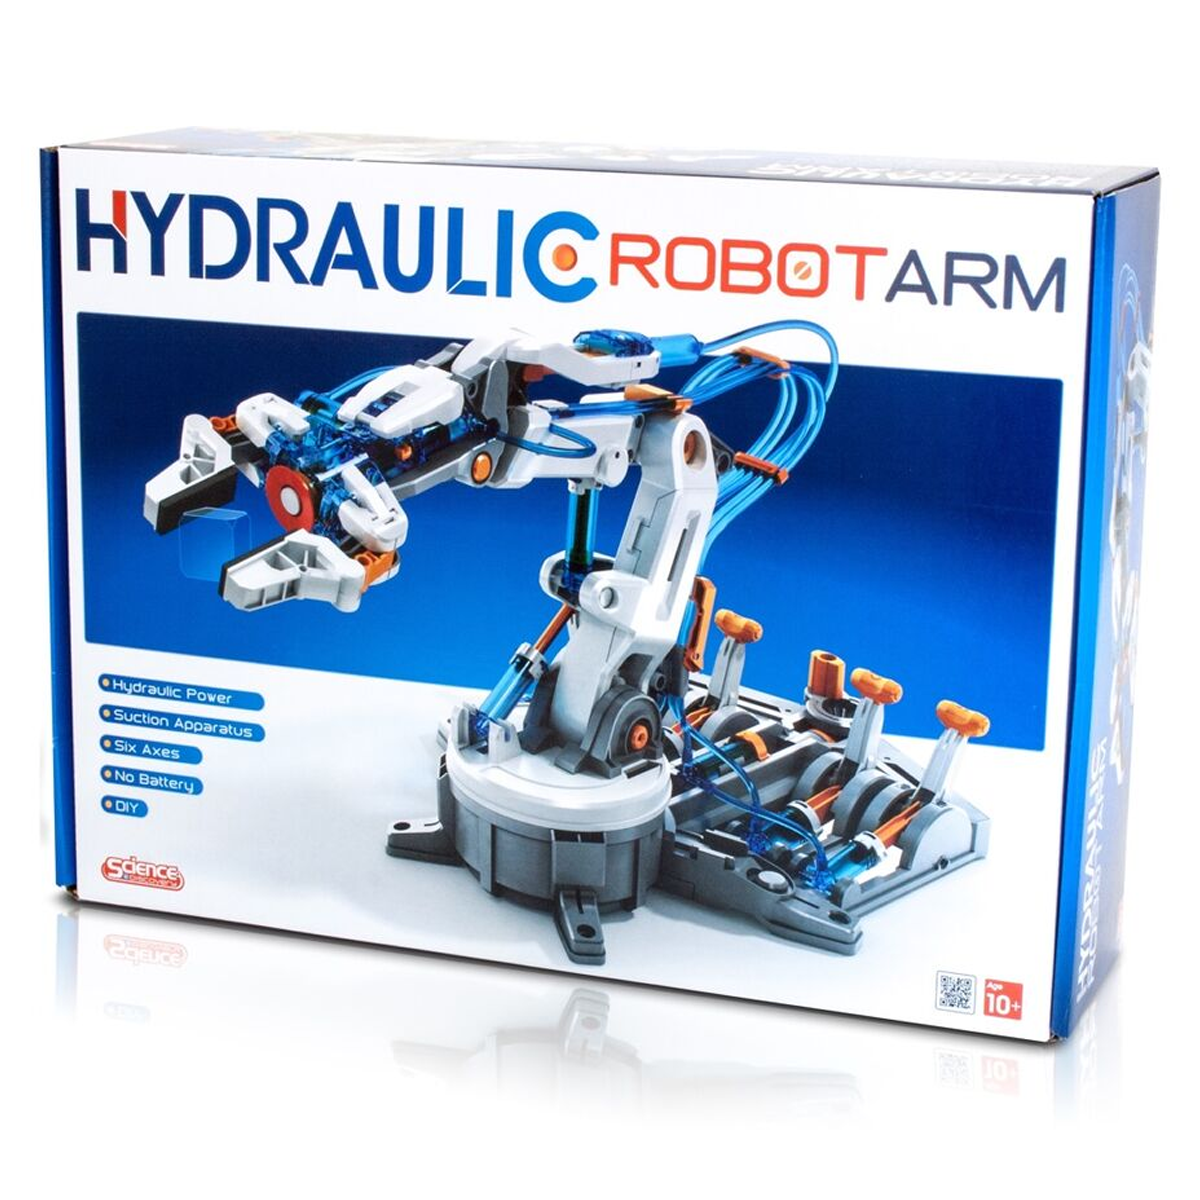 Hydraulic Robot Arm - Red5